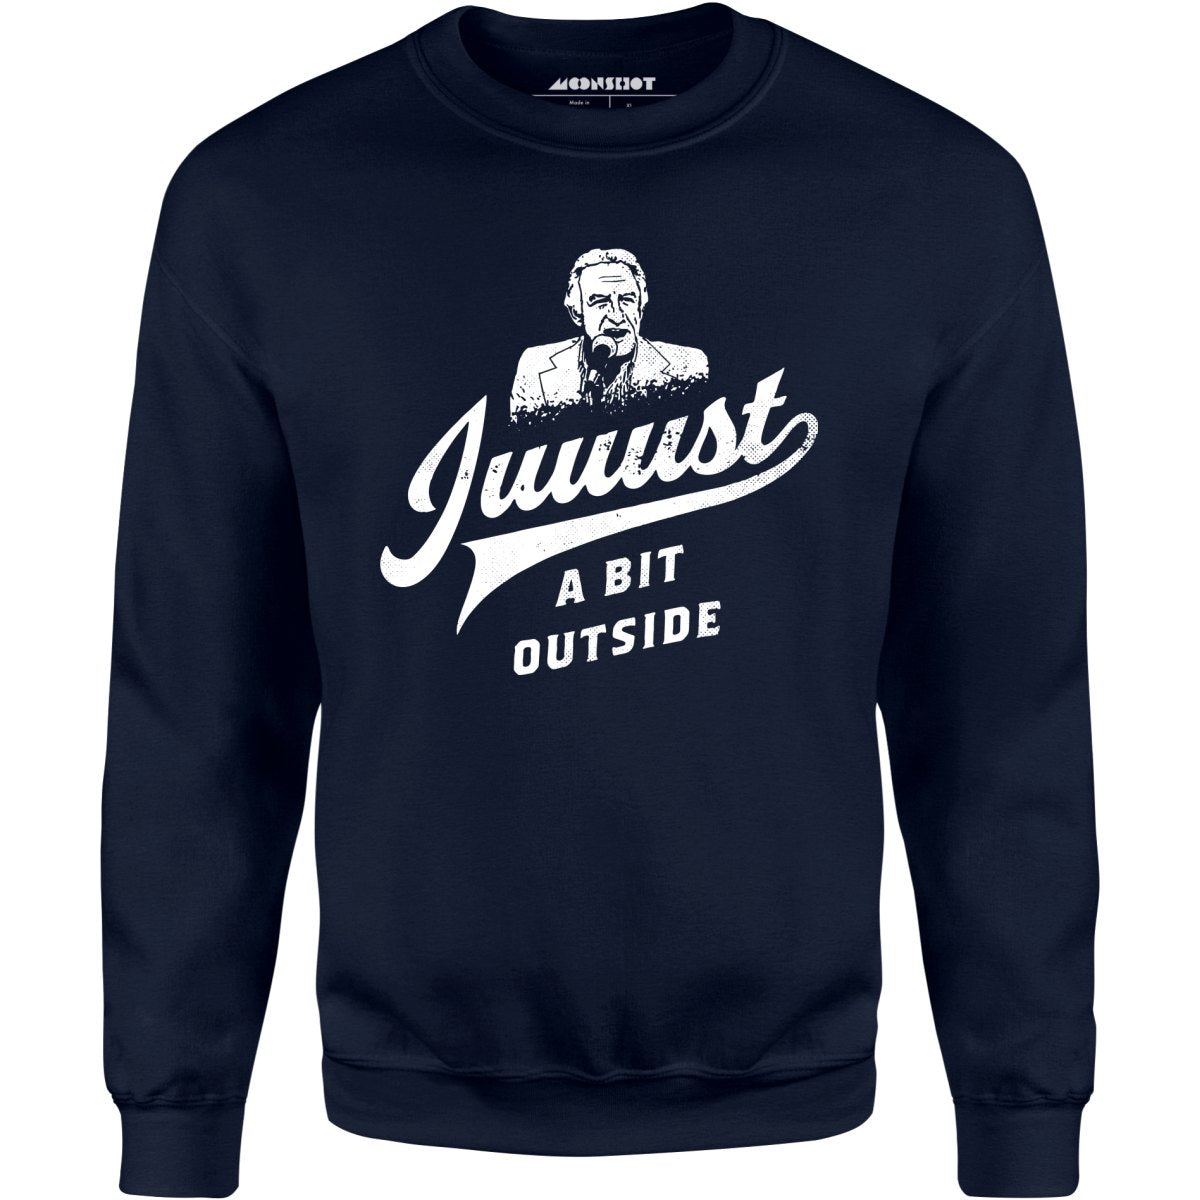 Juuust a Bit Outside - Unisex Sweatshirt